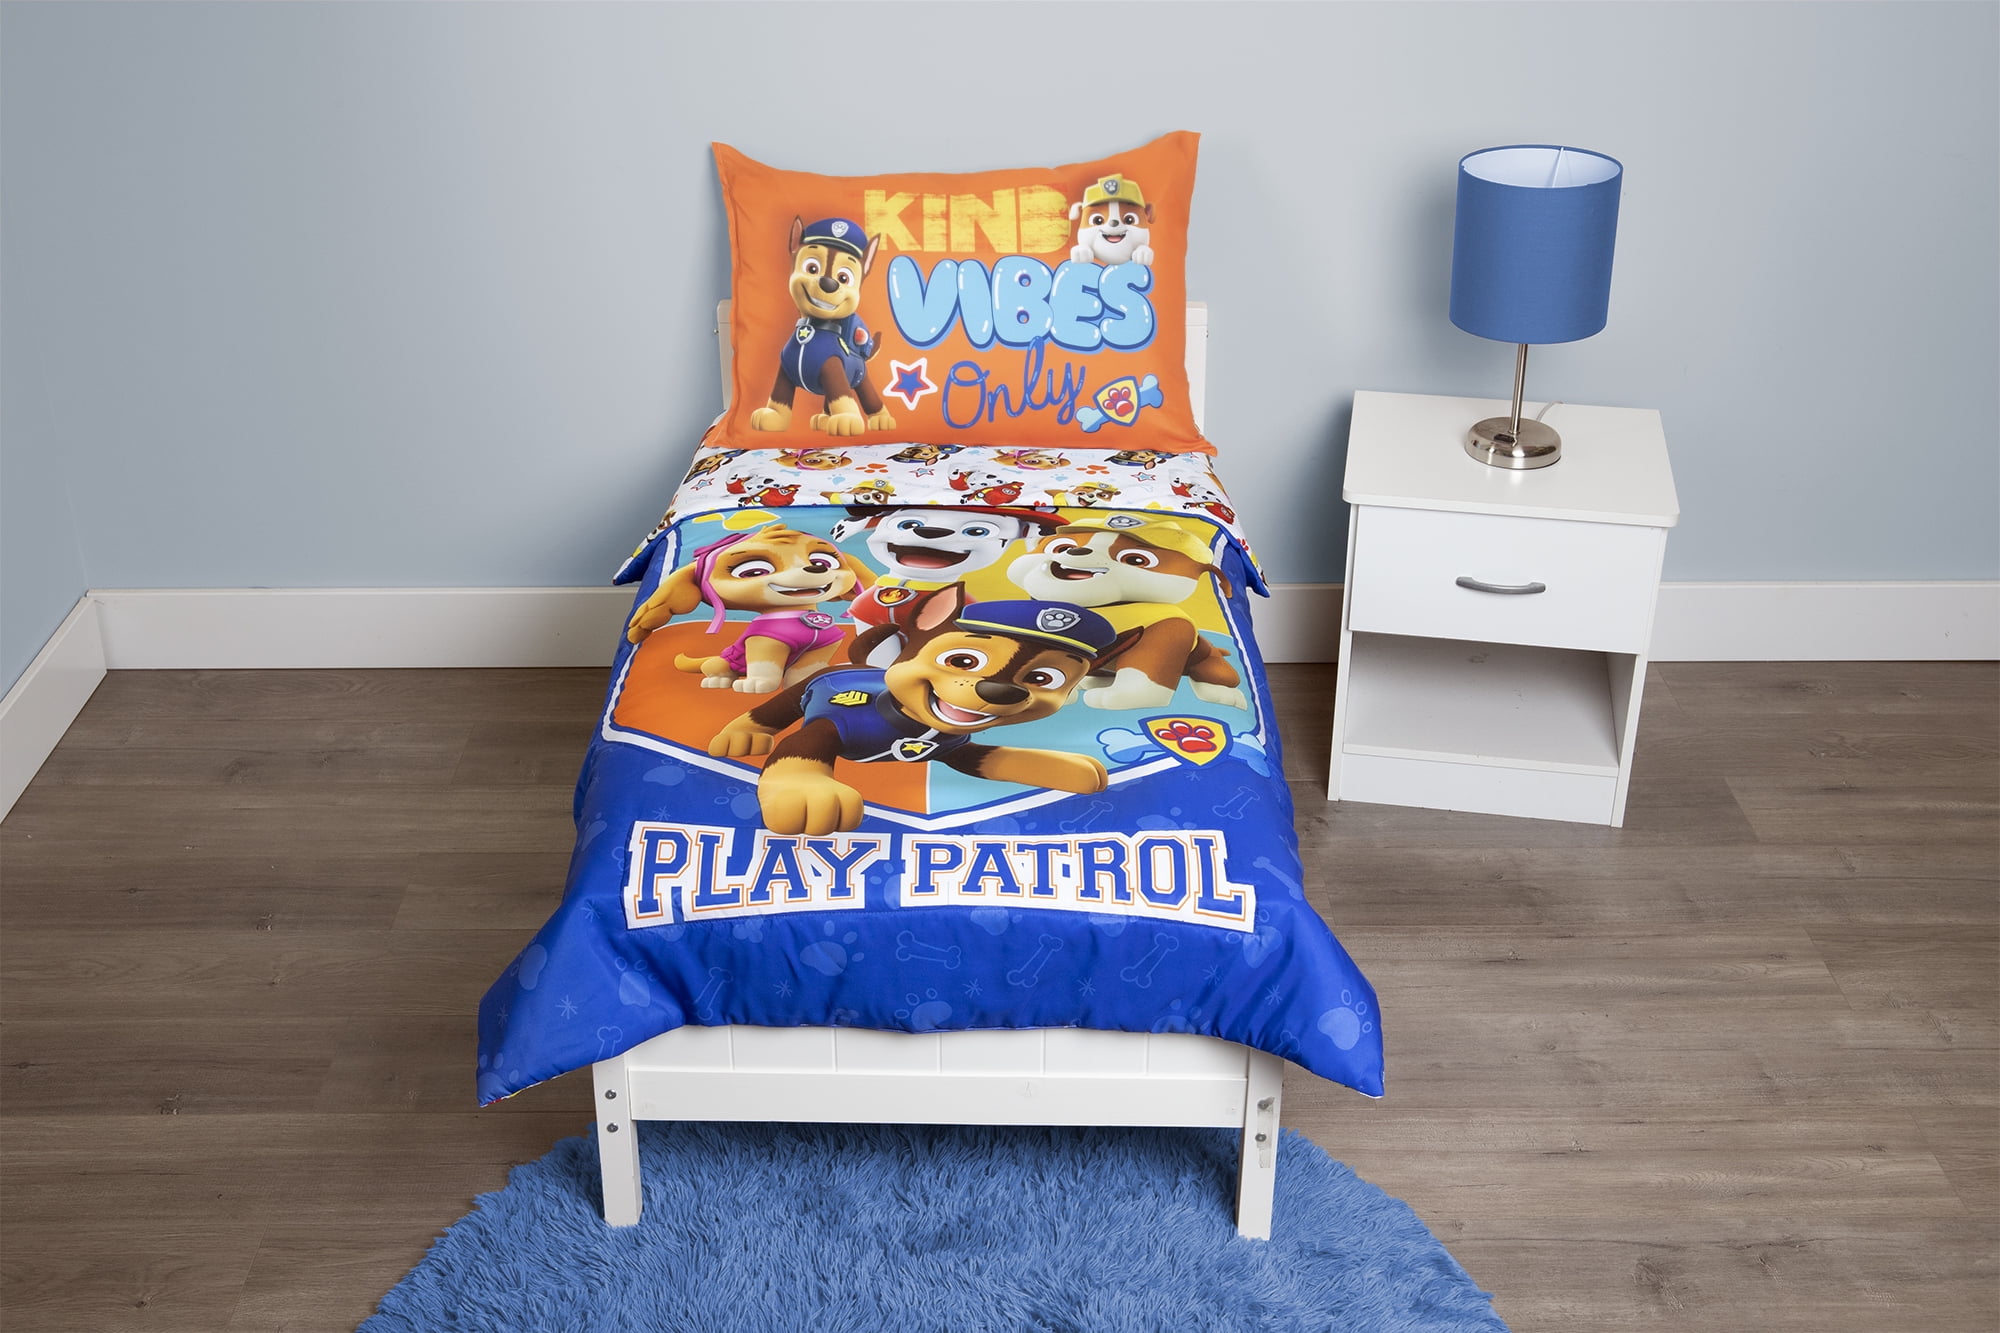 segmento estas Acostumbrarse a PAW Patrol 4-Piece Toddler Bedding Set, Play Patrol, Toddler Bed, Blue -  Walmart.com